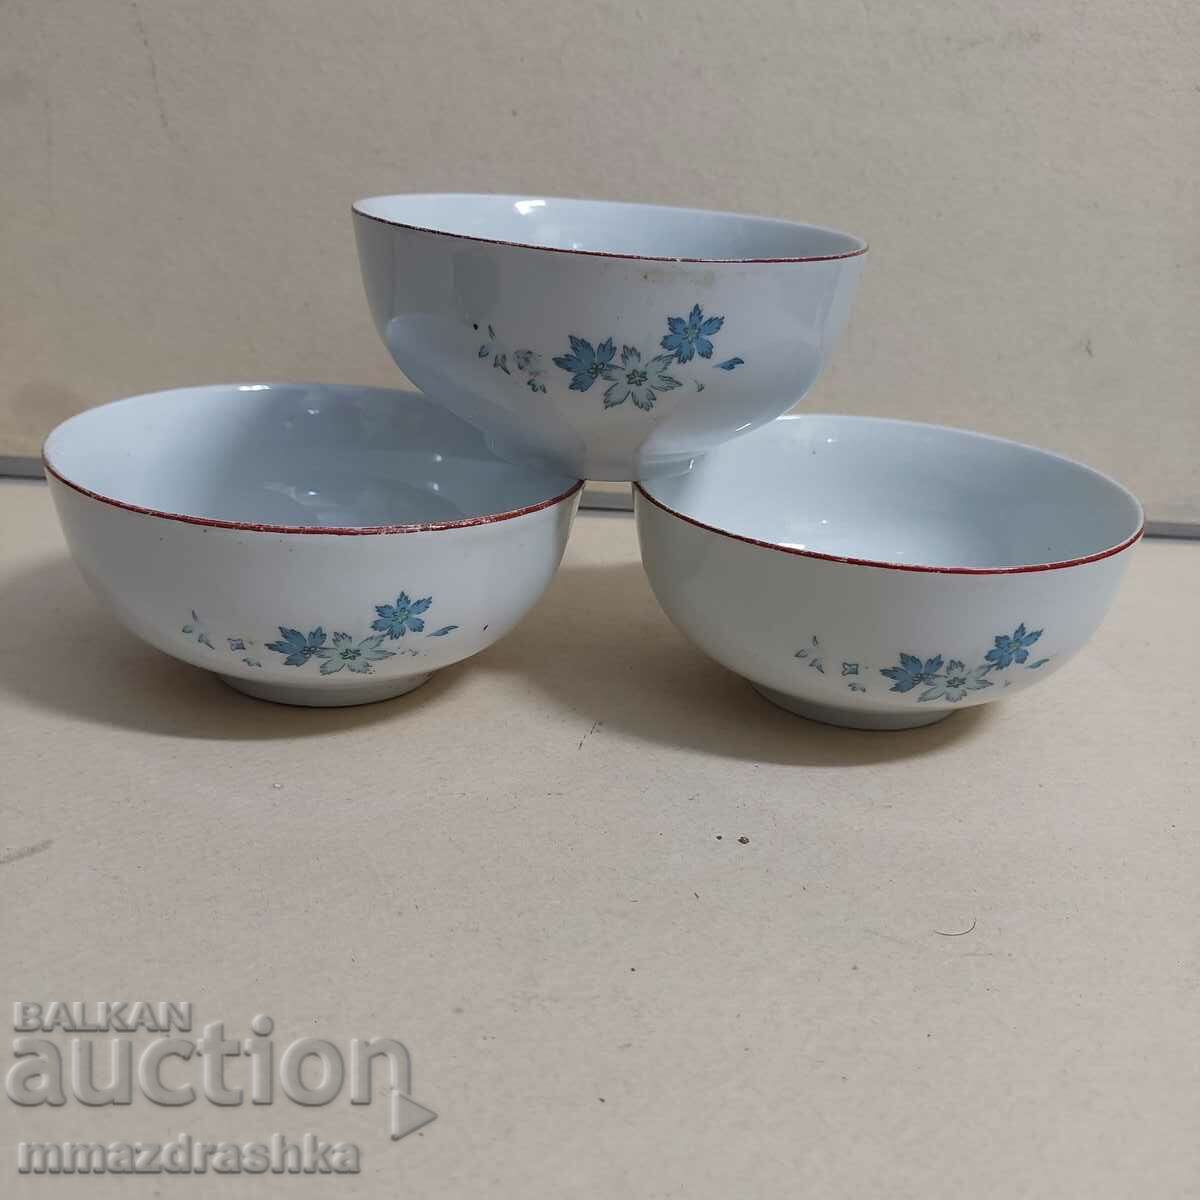 Porcelain bowls by KITKA